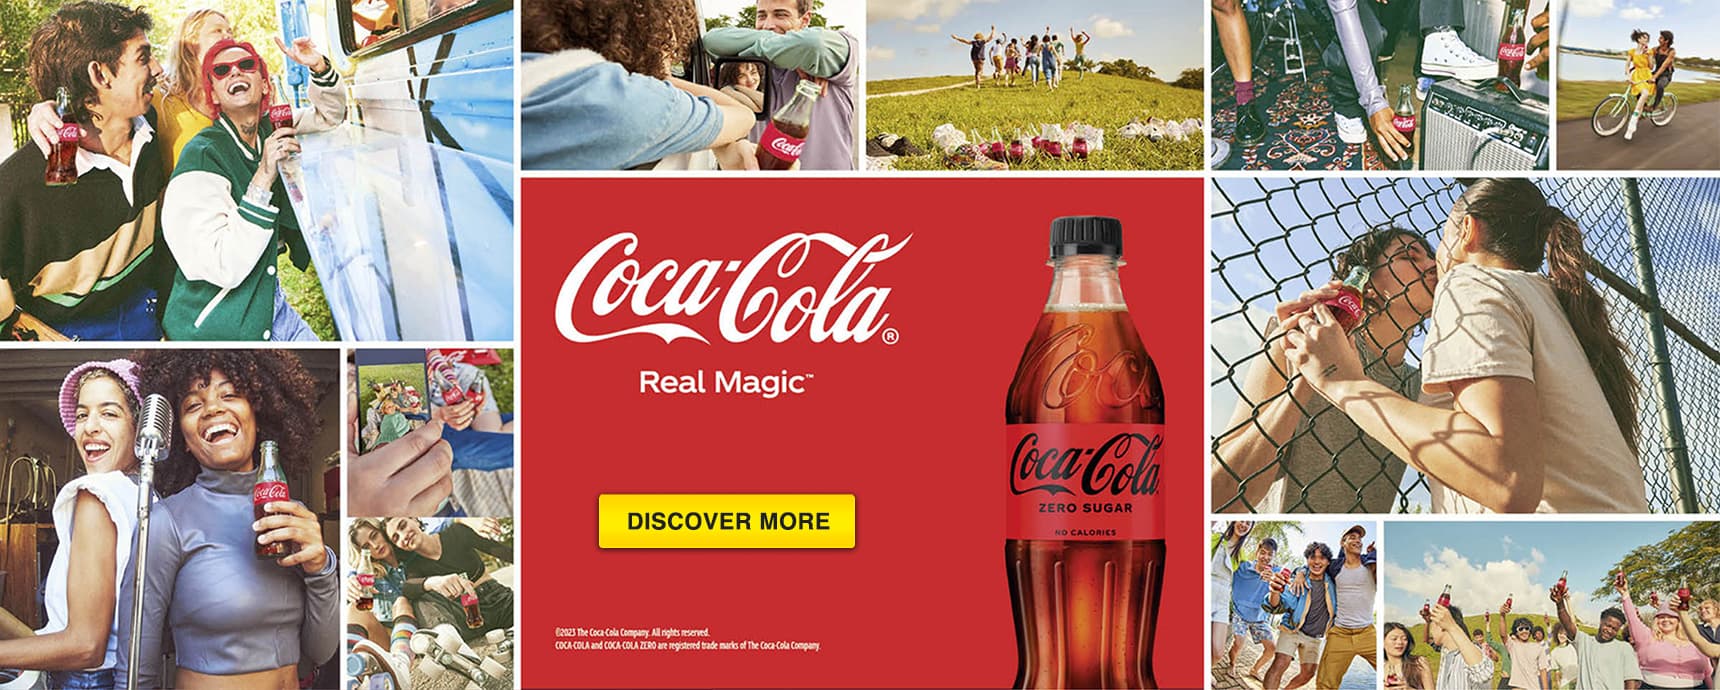 Coca Cola Real Magic - Discover More